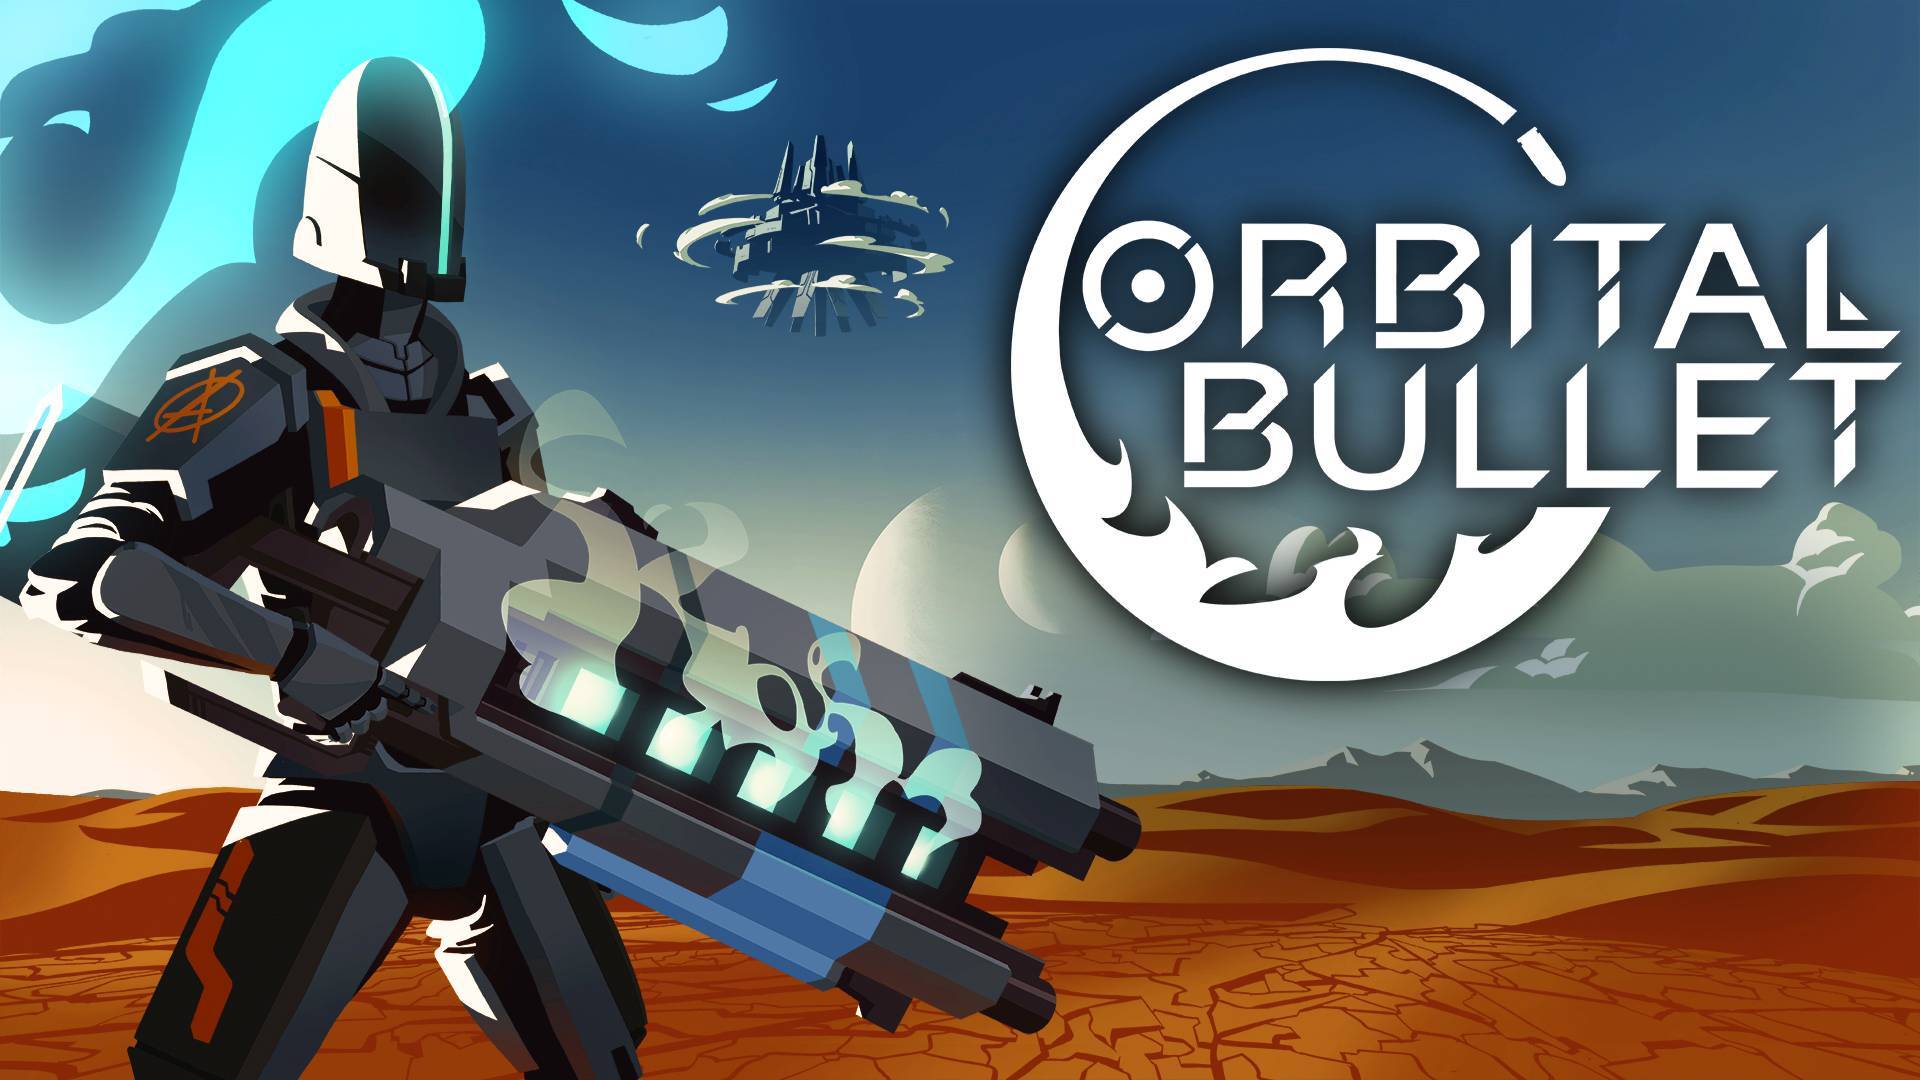 Orbital Bullet arriba a PlayStation